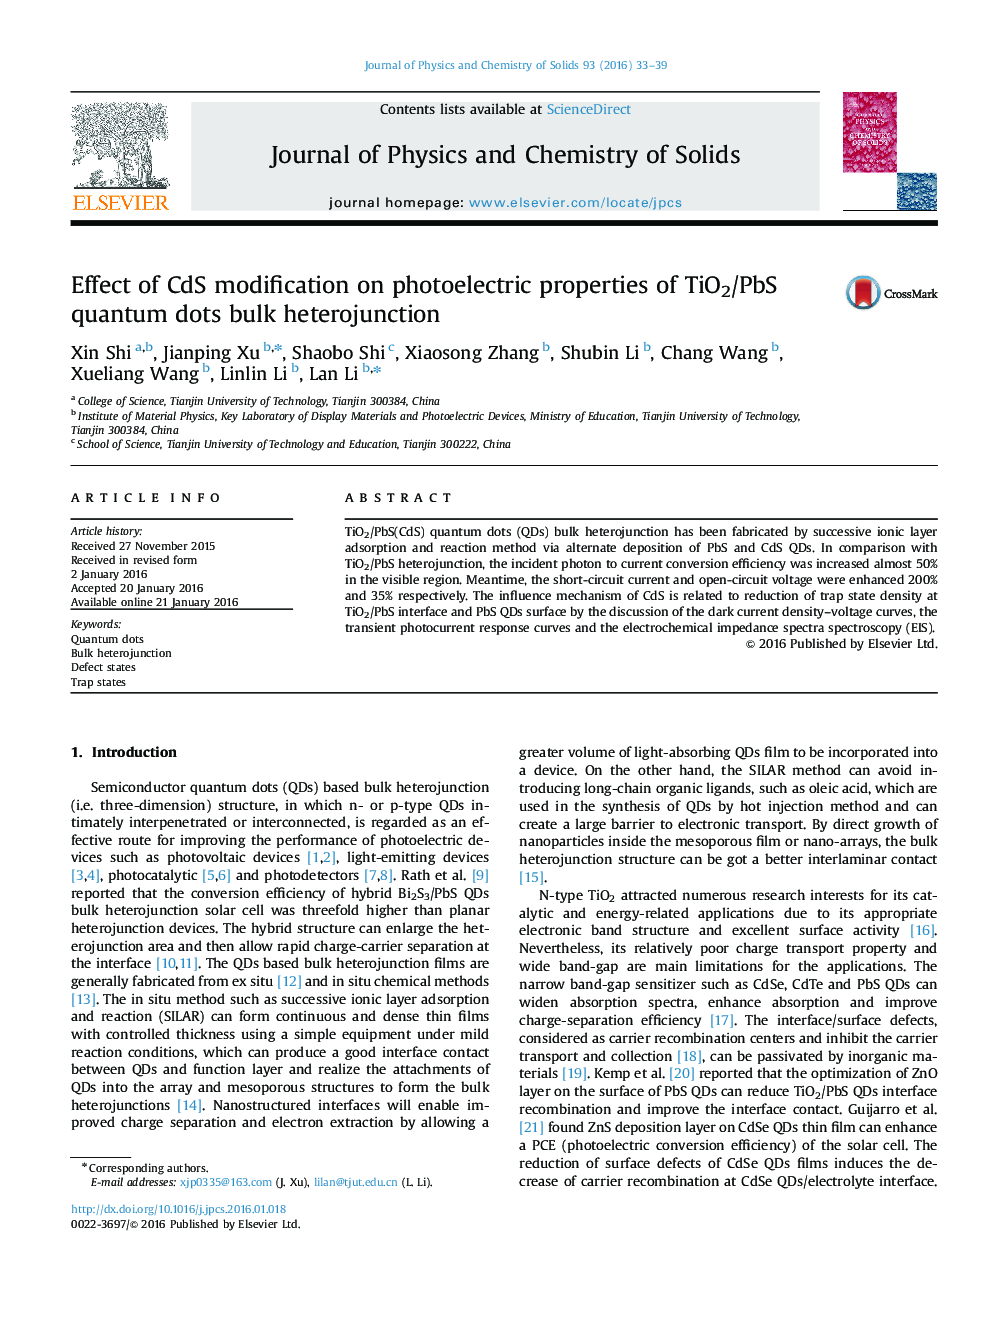 Effect of CdS modification on photoelectric properties of TiO2/PbS quantum dots bulk heterojunction